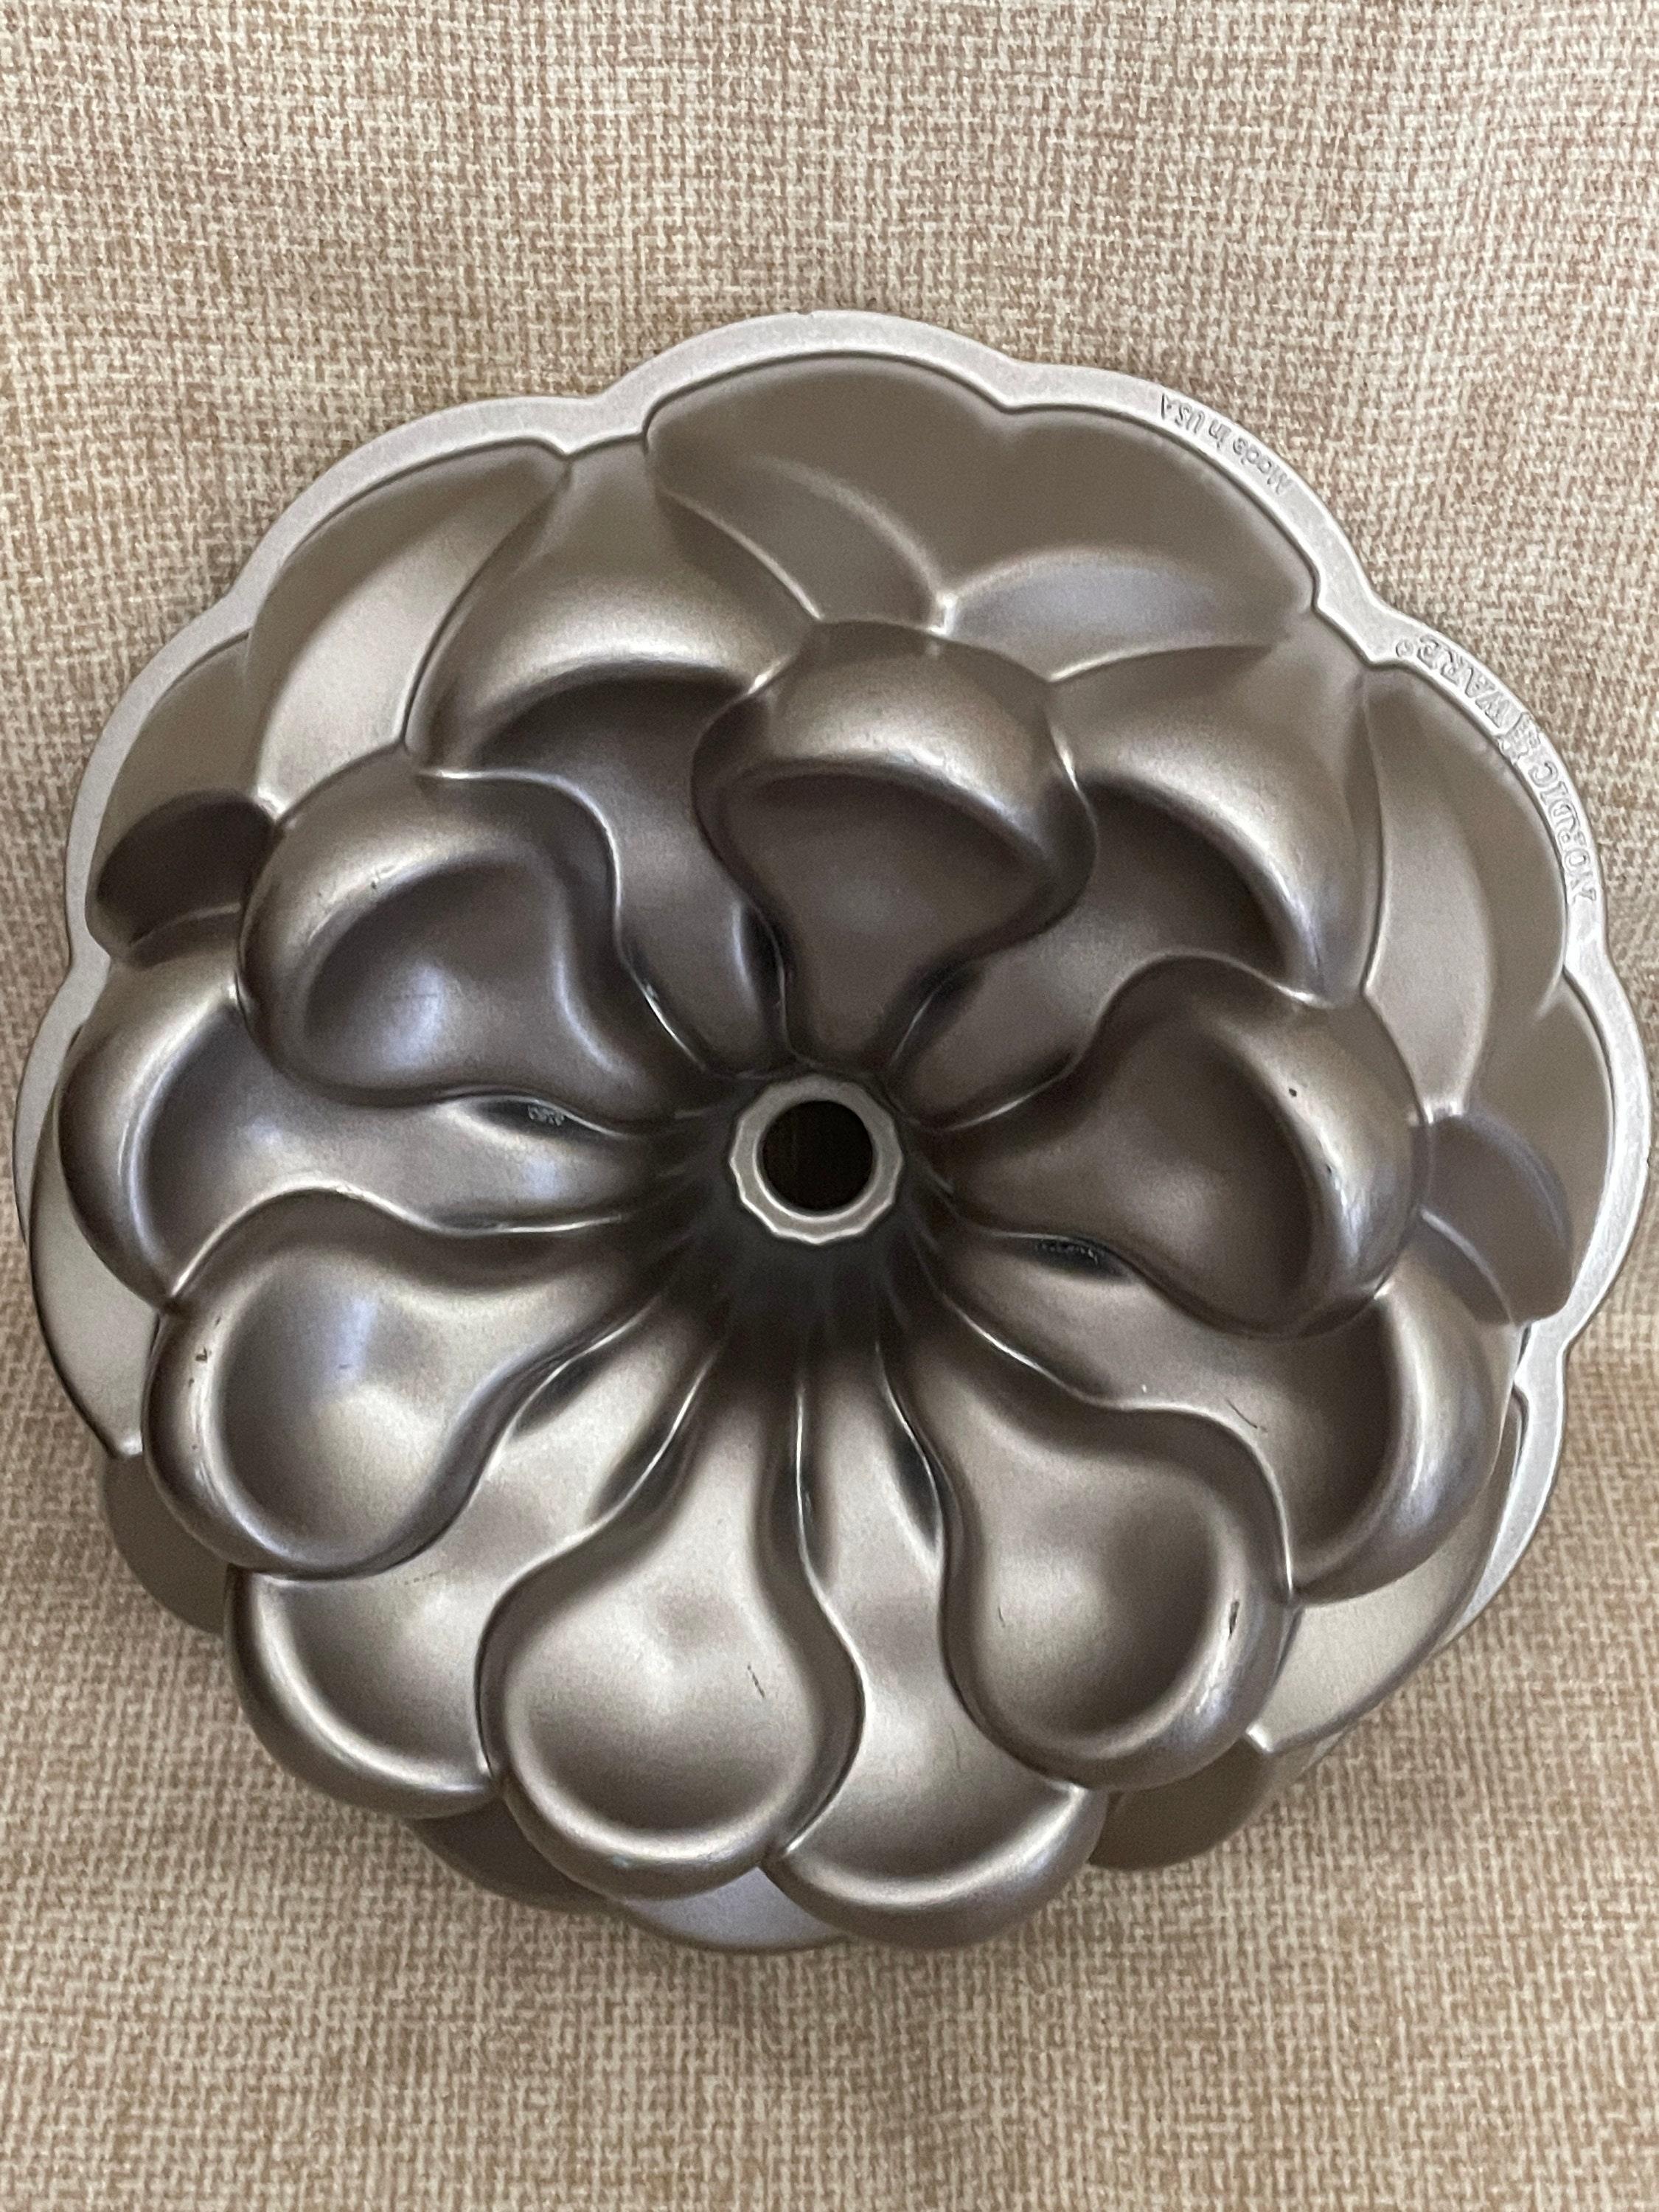  Nordic Ware Magnolia Cast Aluminum Bundt Pan, 10 Cup